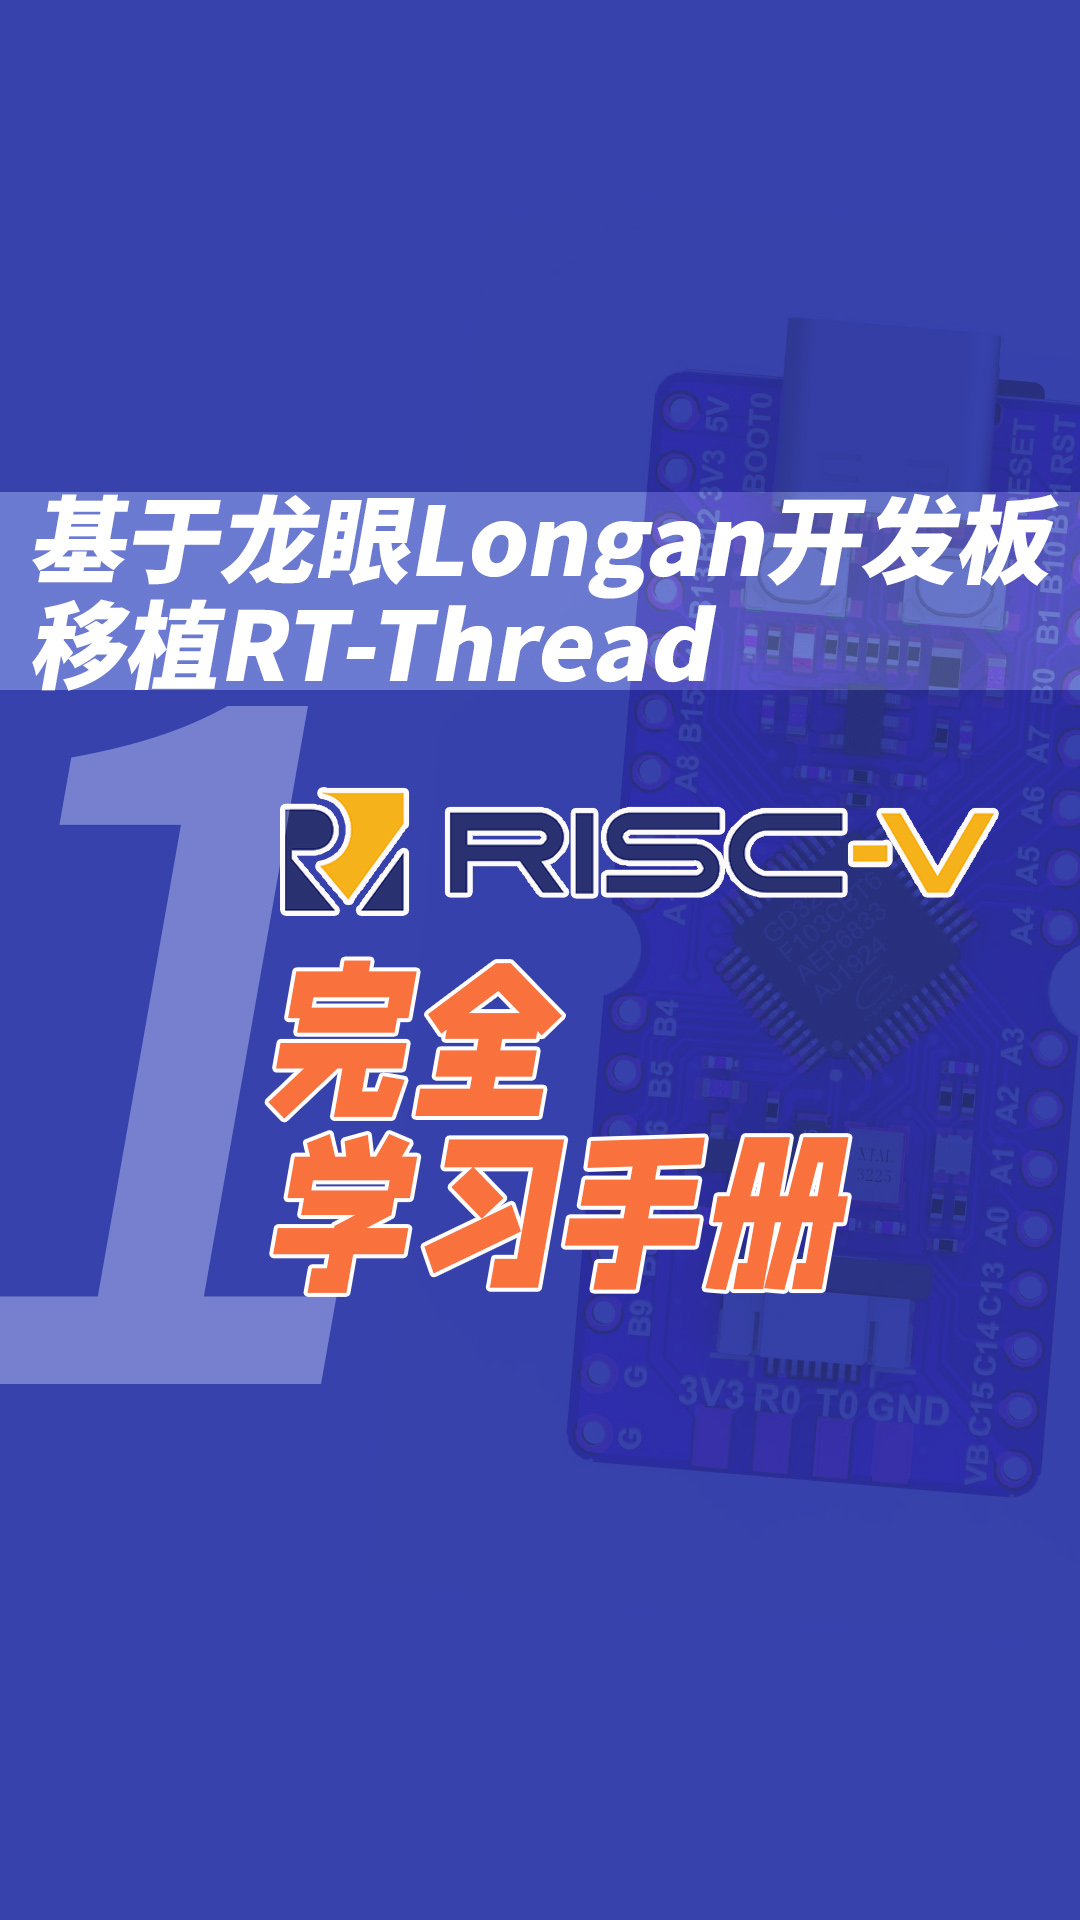 RISC-V完全学习手册(基于龙眼Longan开发板移植RT-Thread)1